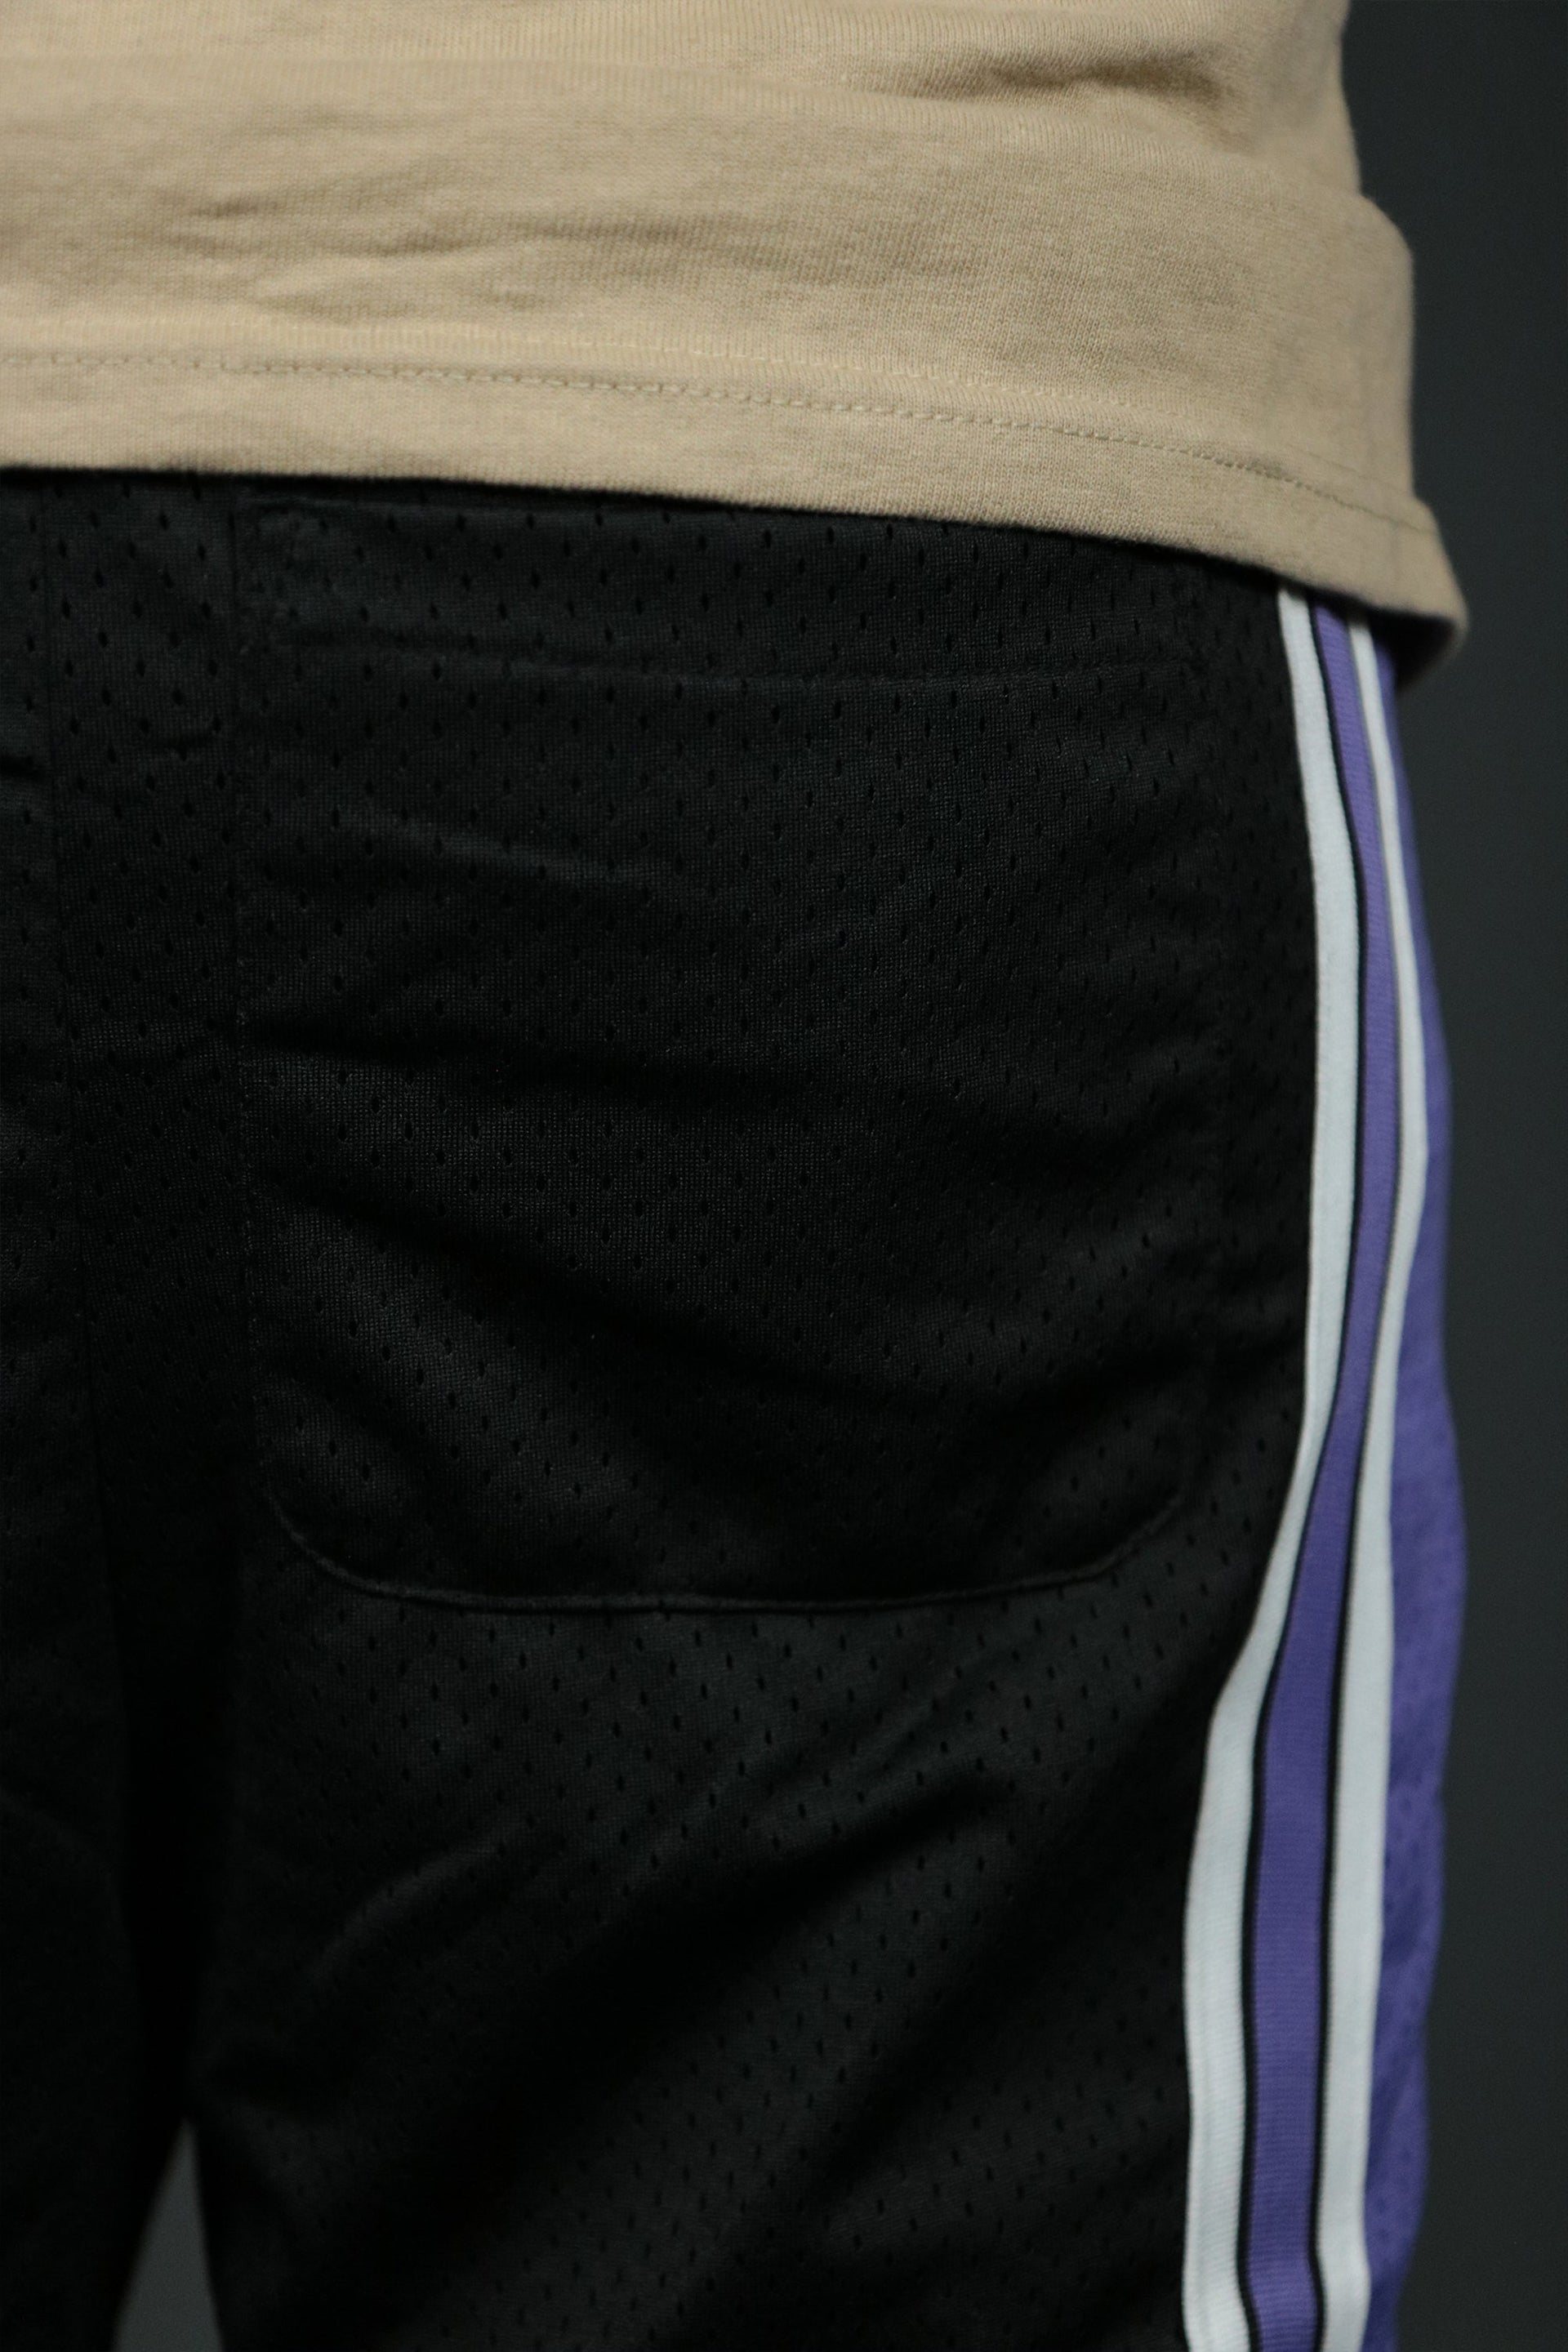 The back pocket of the black purple men's mesh basketball shorts for Sacramento.